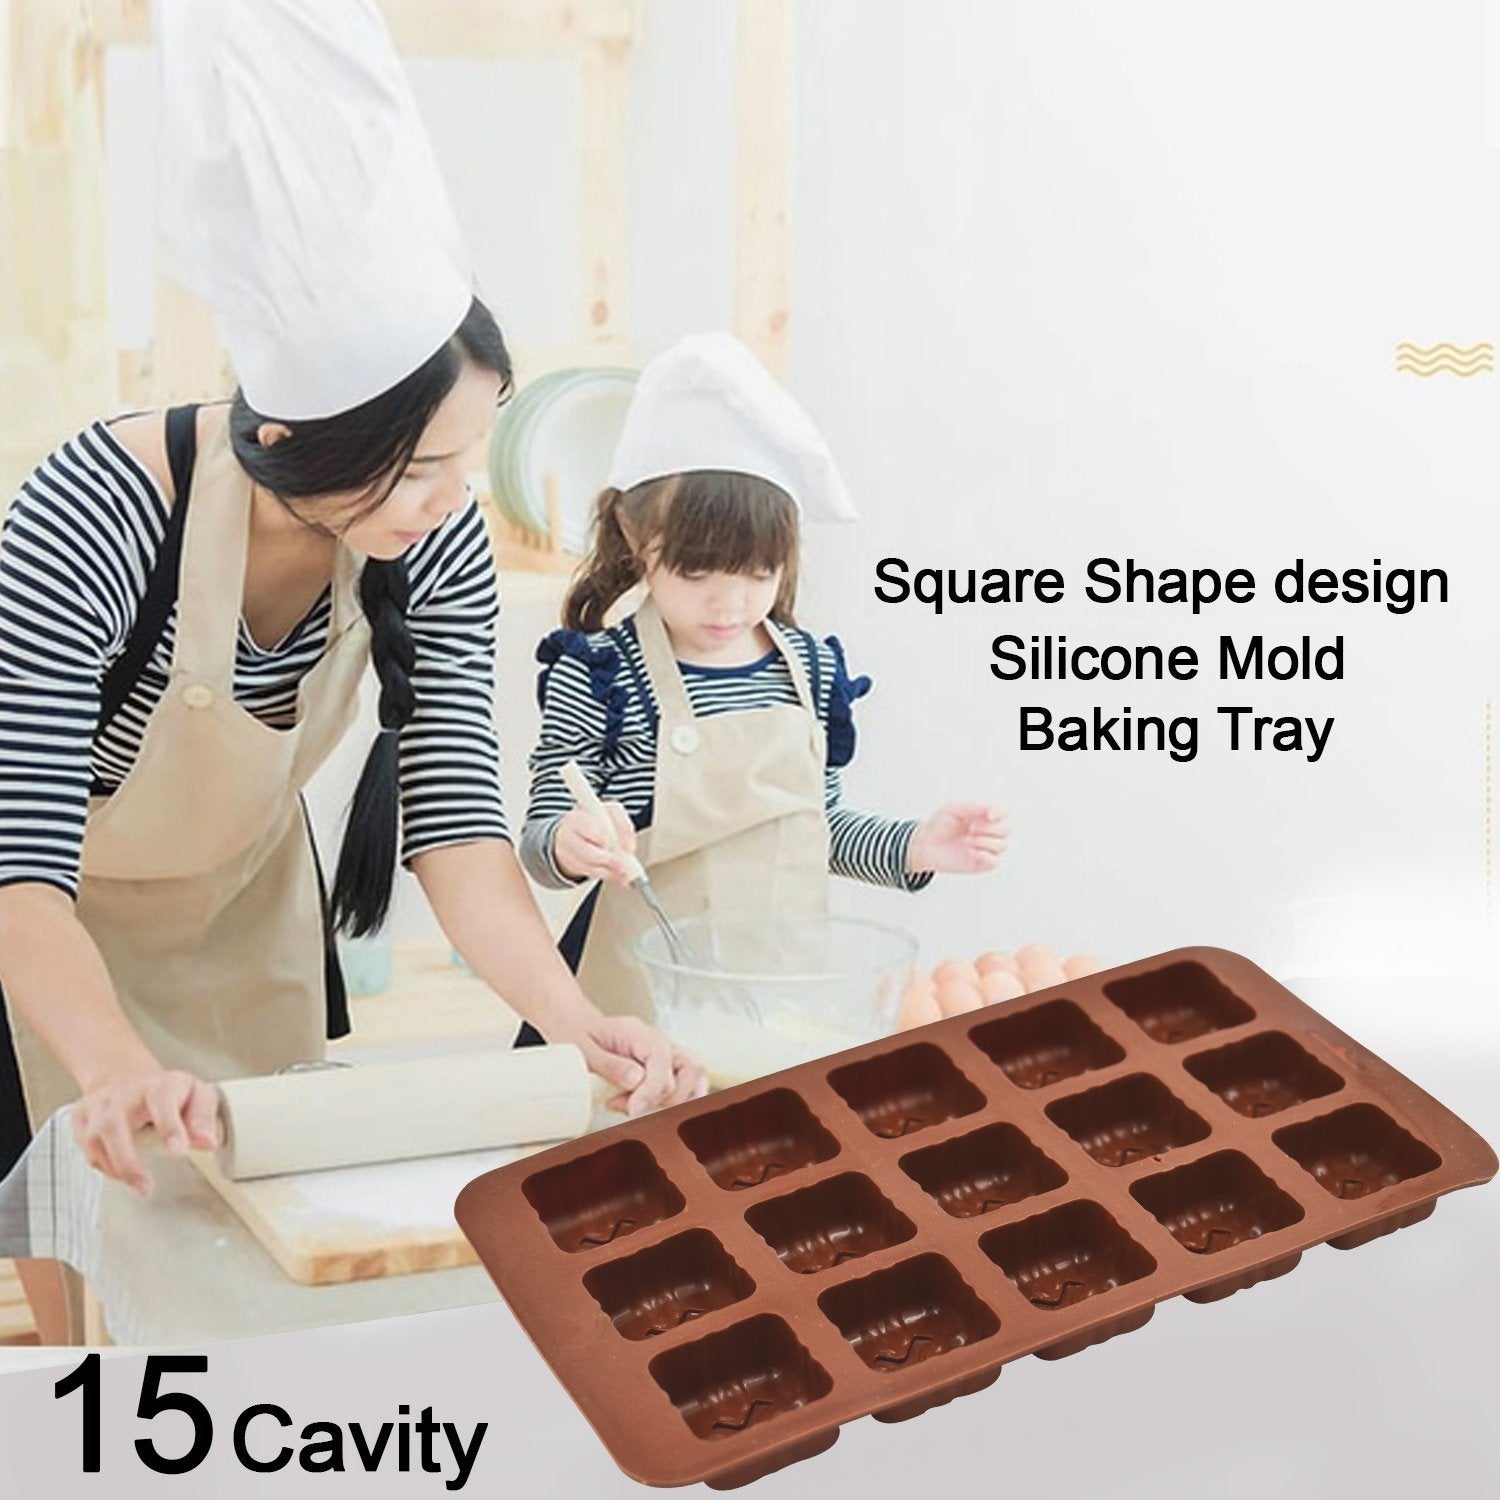 4632 15 Cavity Square Shape design Silicone Mold Baking Tray - SkyShopy